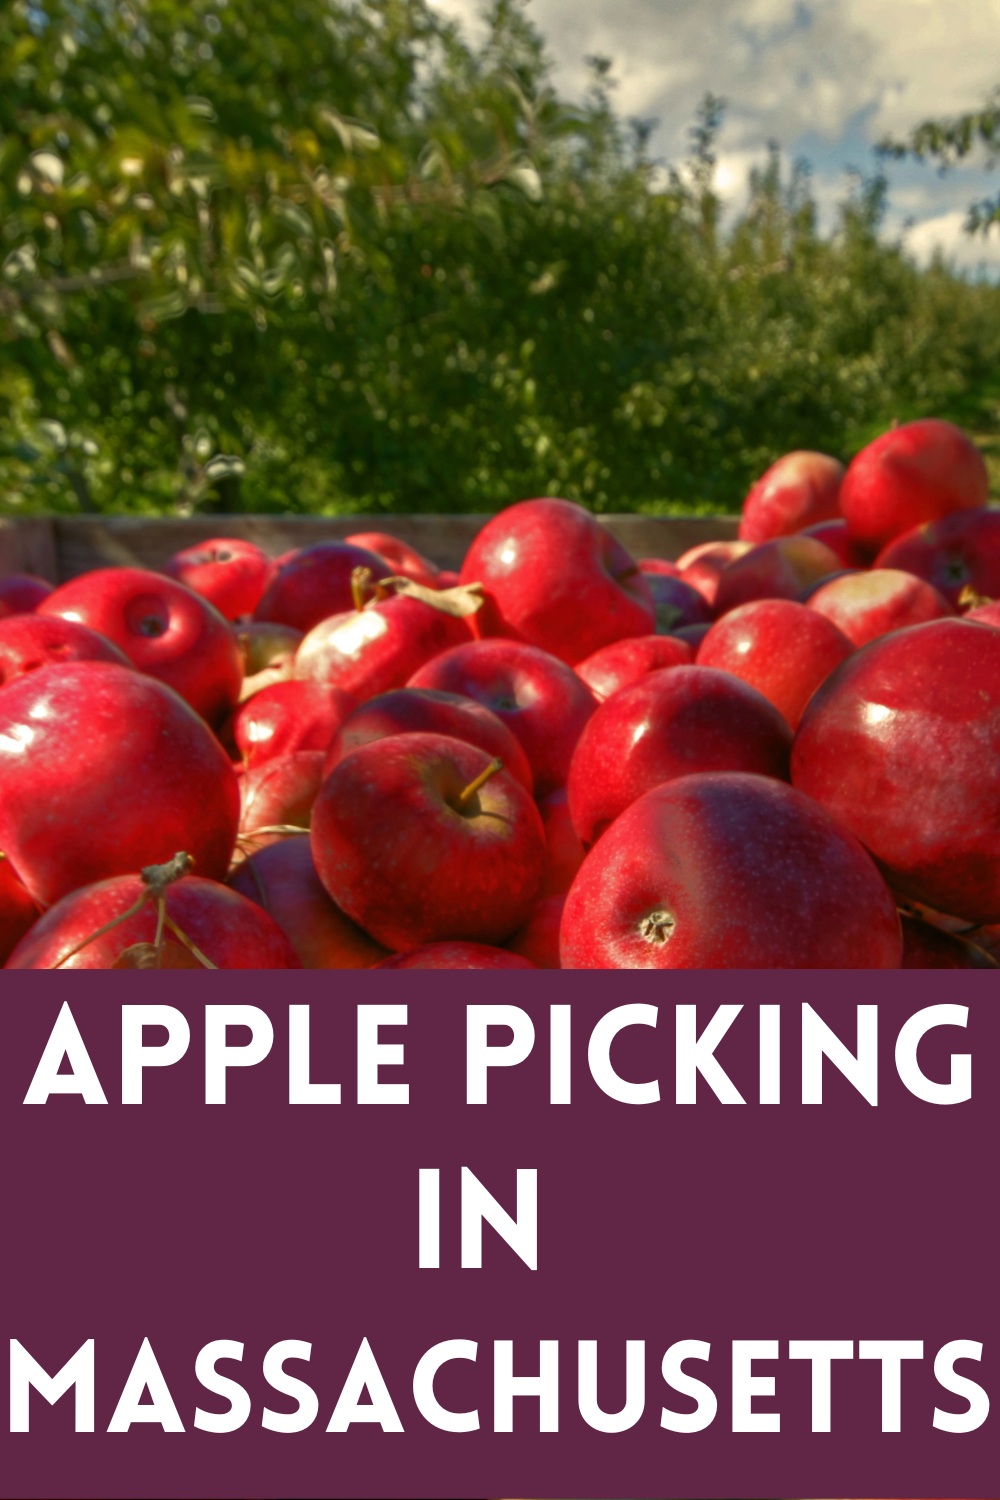 Massachusetts PYO Apple Picking